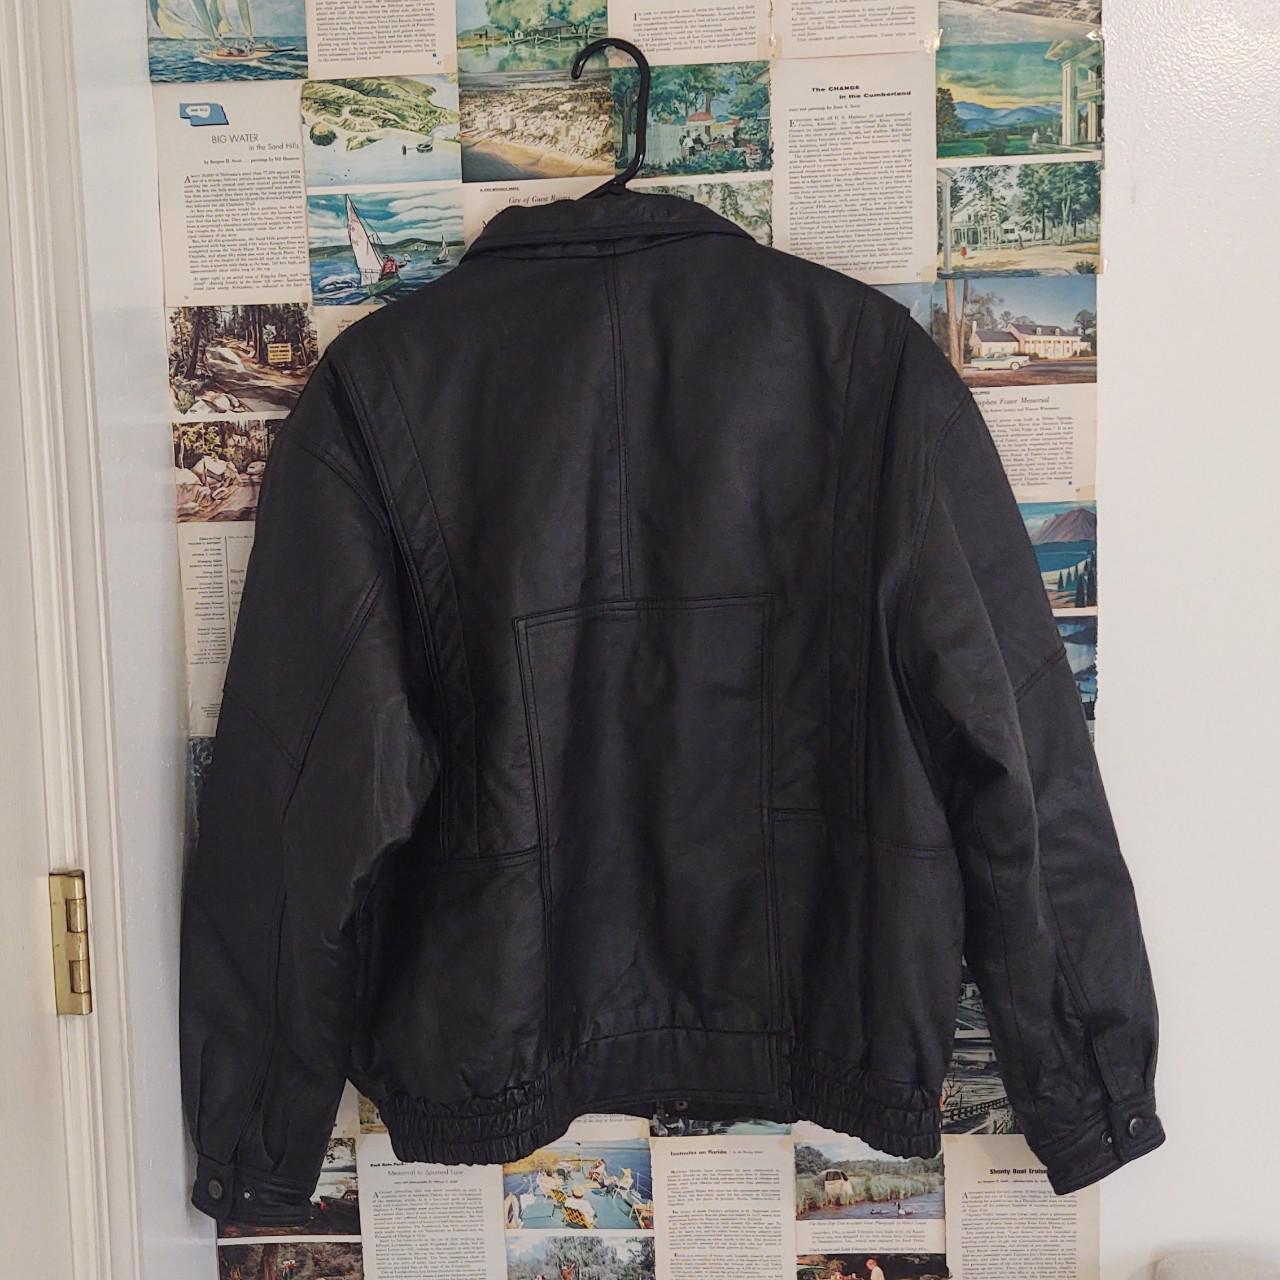 Product Image 2 - Outbrook black leather jacket size